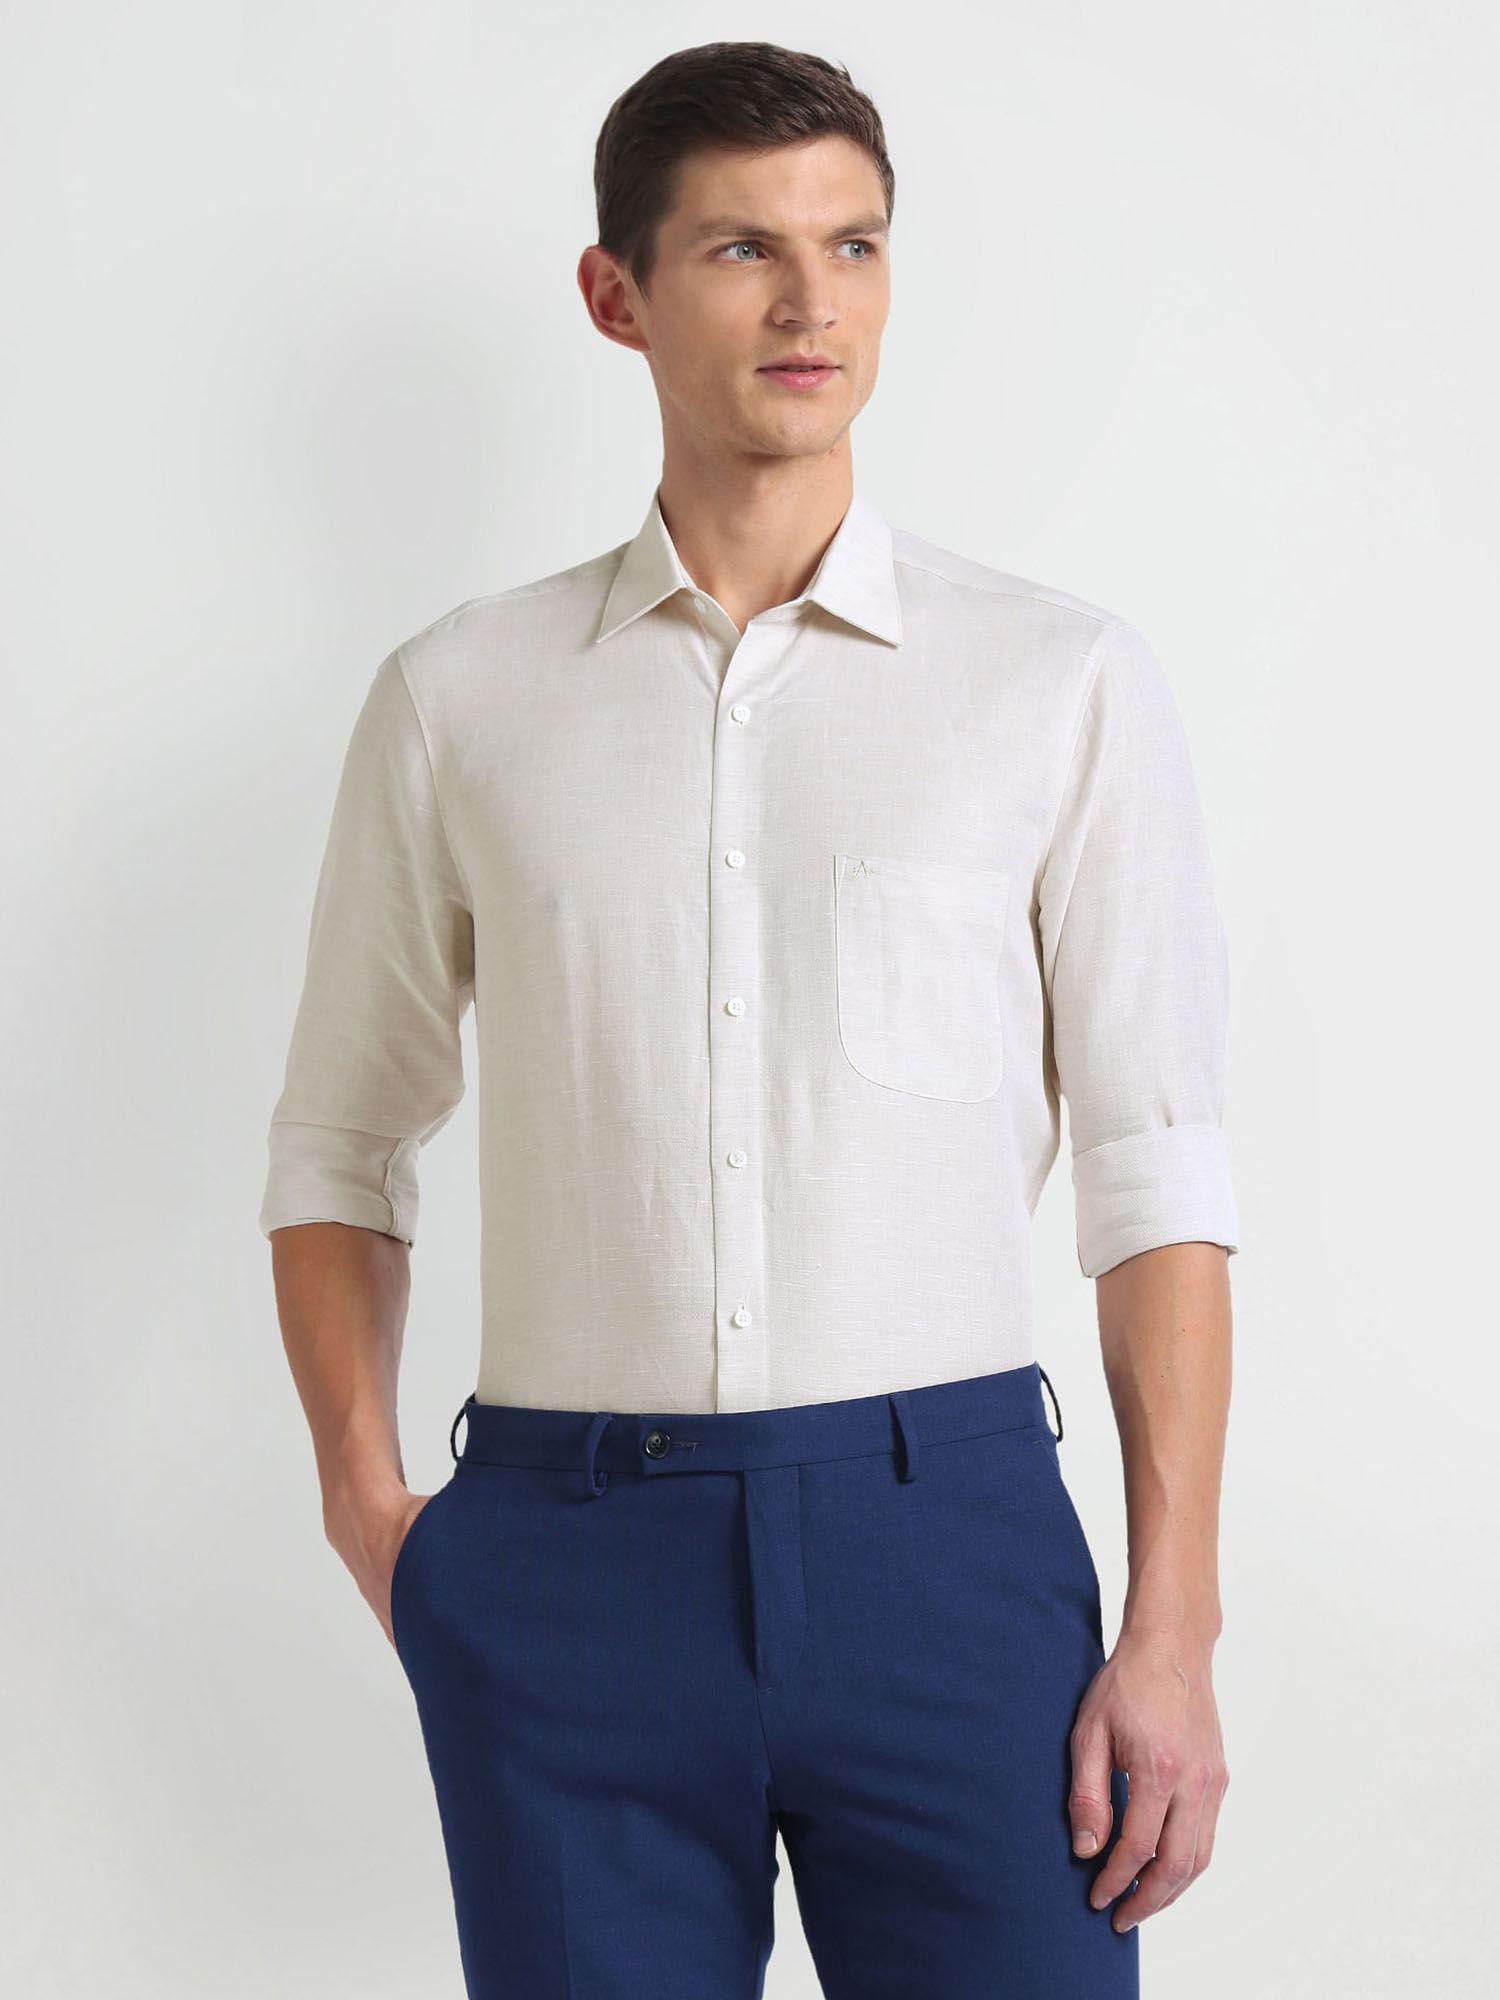 Beige Linen Cotton Heathered Formal Shirt